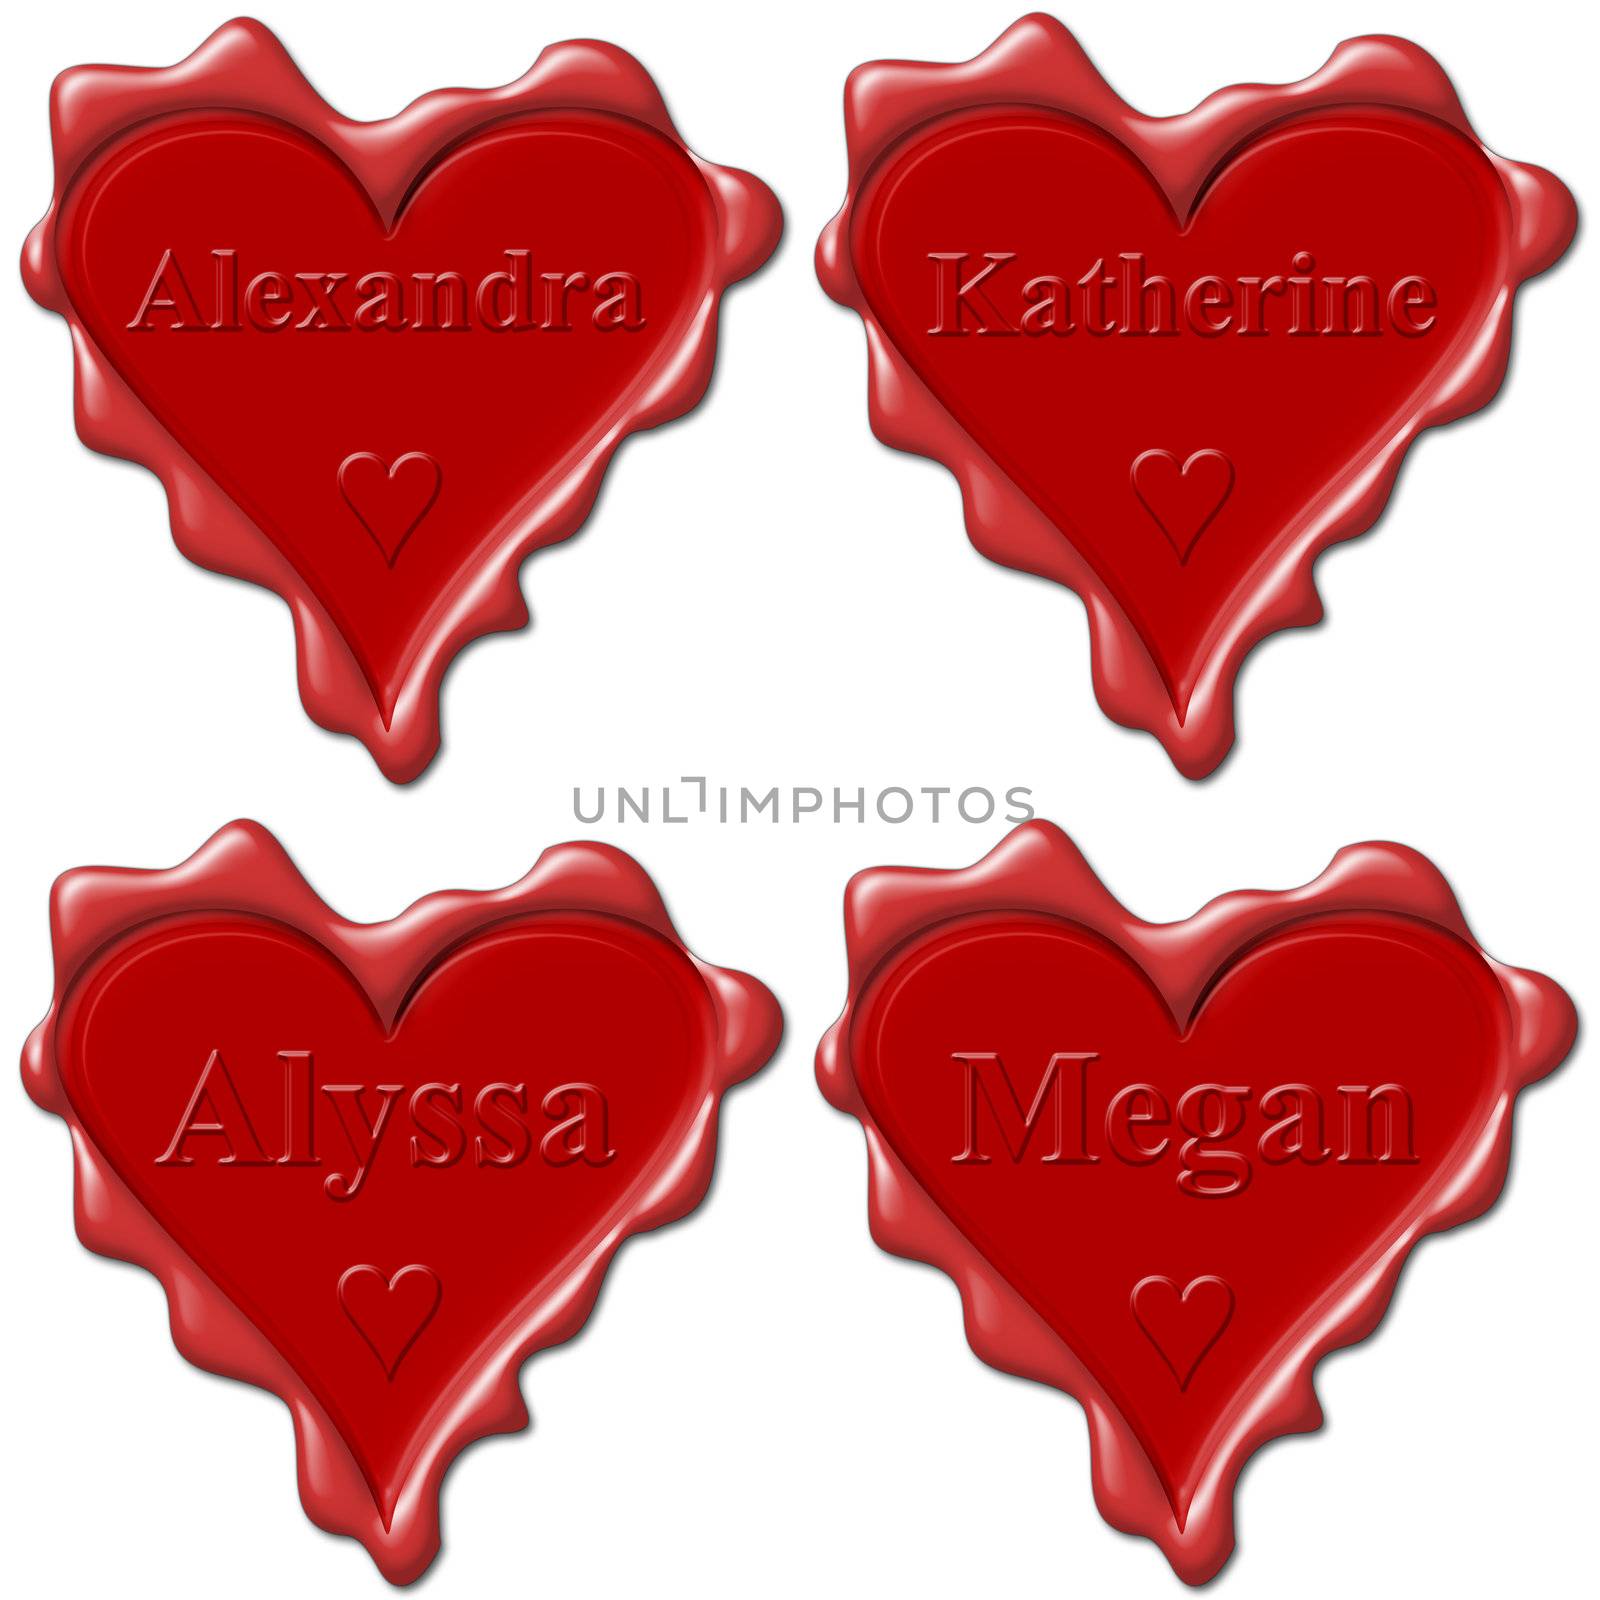 Valentine love hearts with names: Alexandra, Katherine, Alyssa, Megan